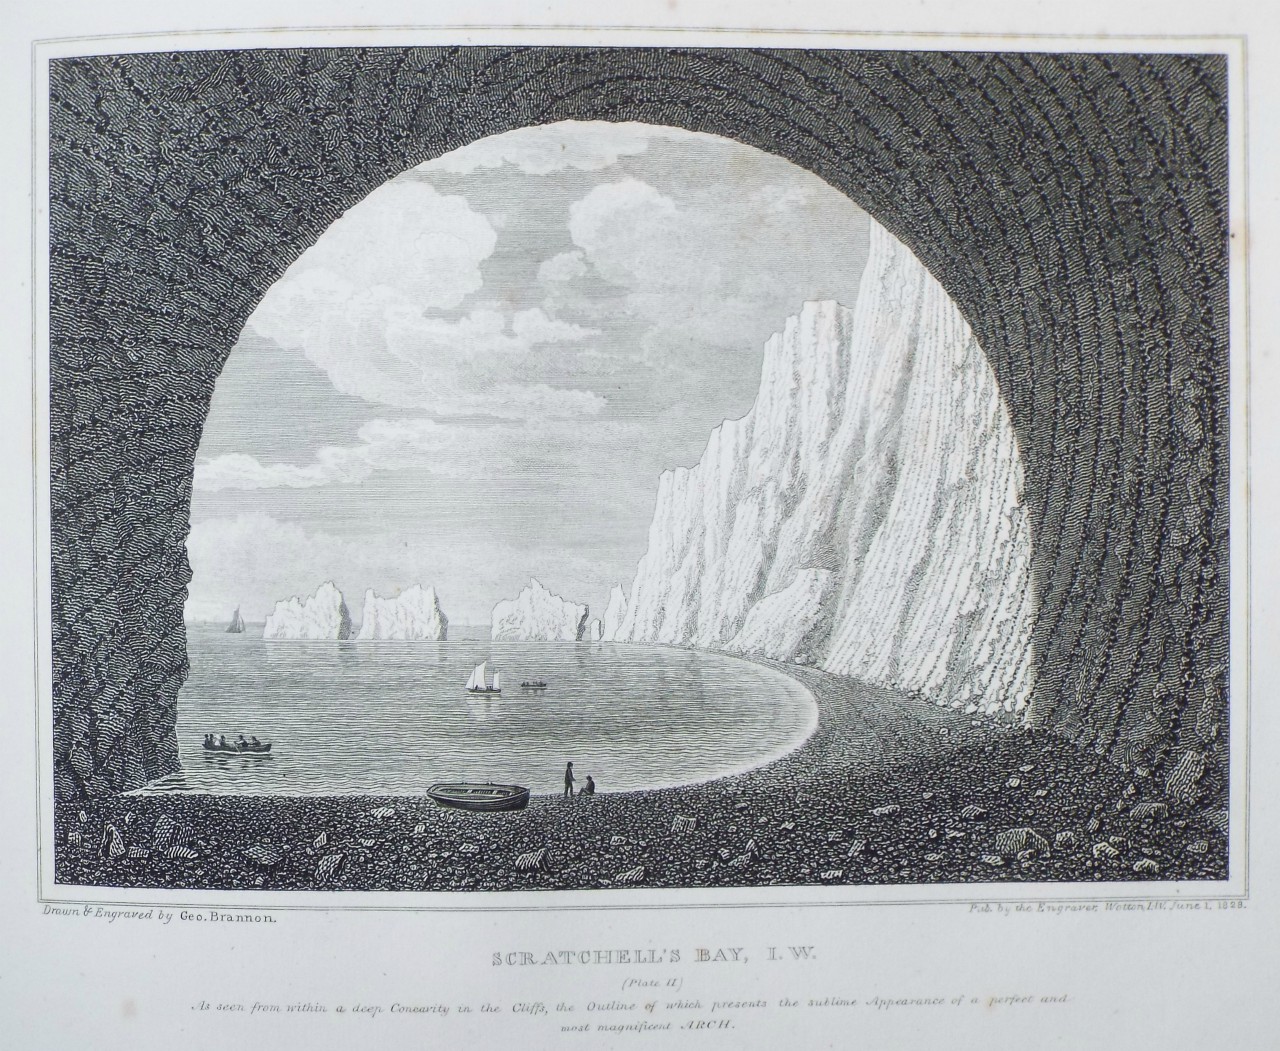 Print - Scratchell's Bay, I.W. (Plate II.) - Brannon